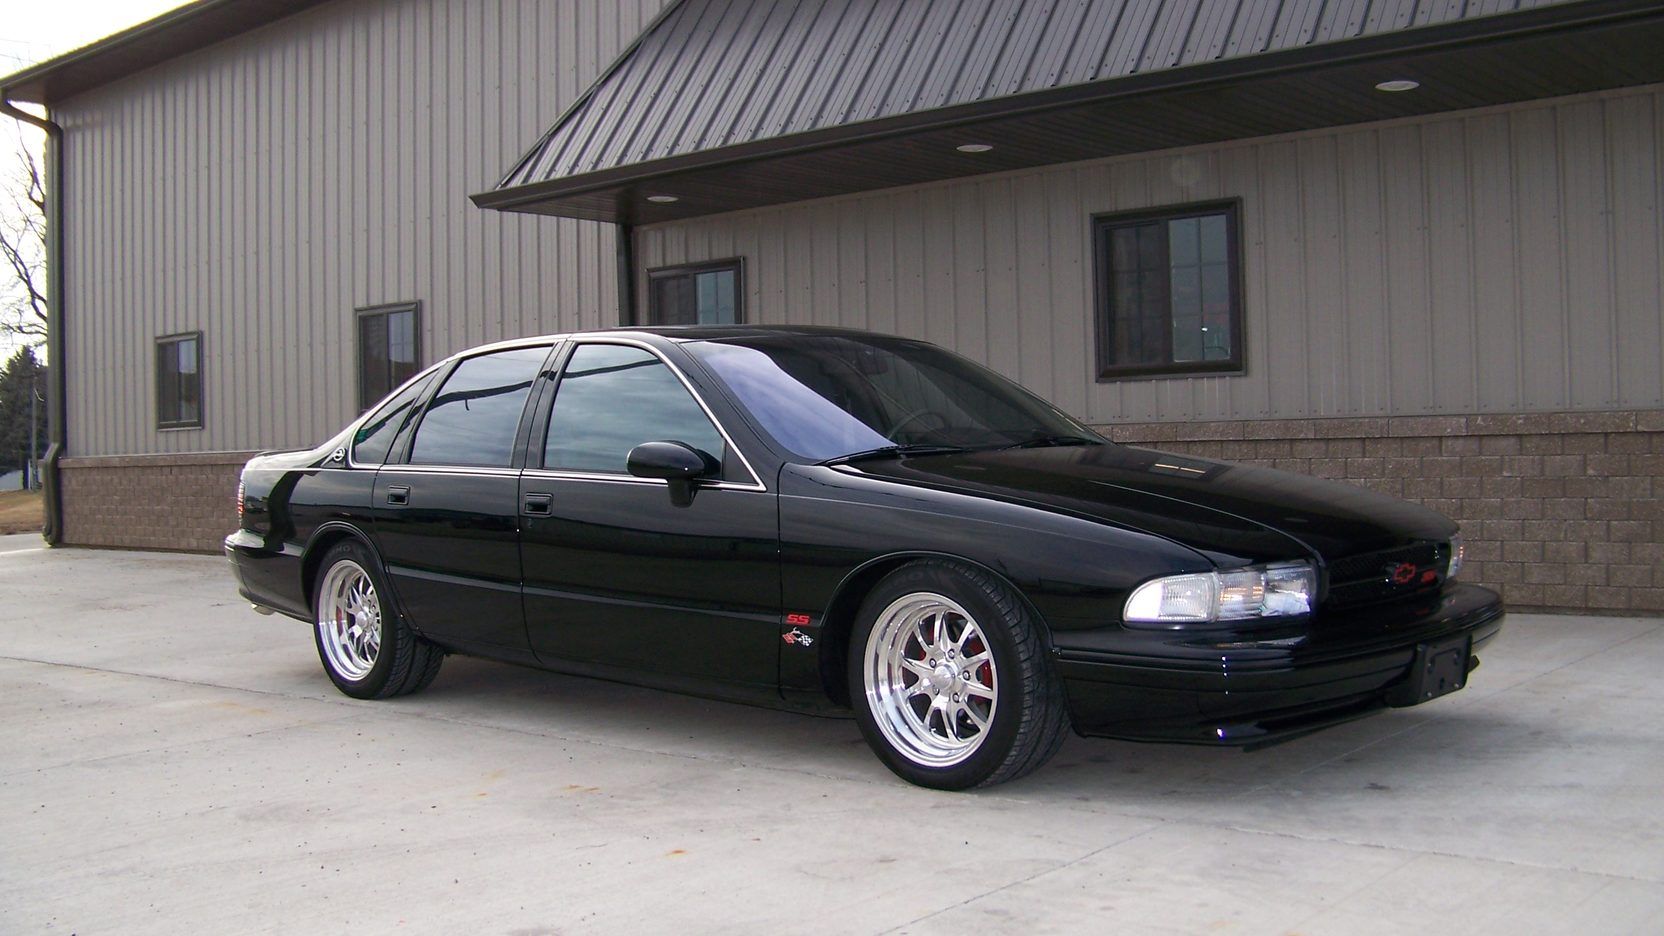 Black 1994 Chevrolet Impala SS Parked